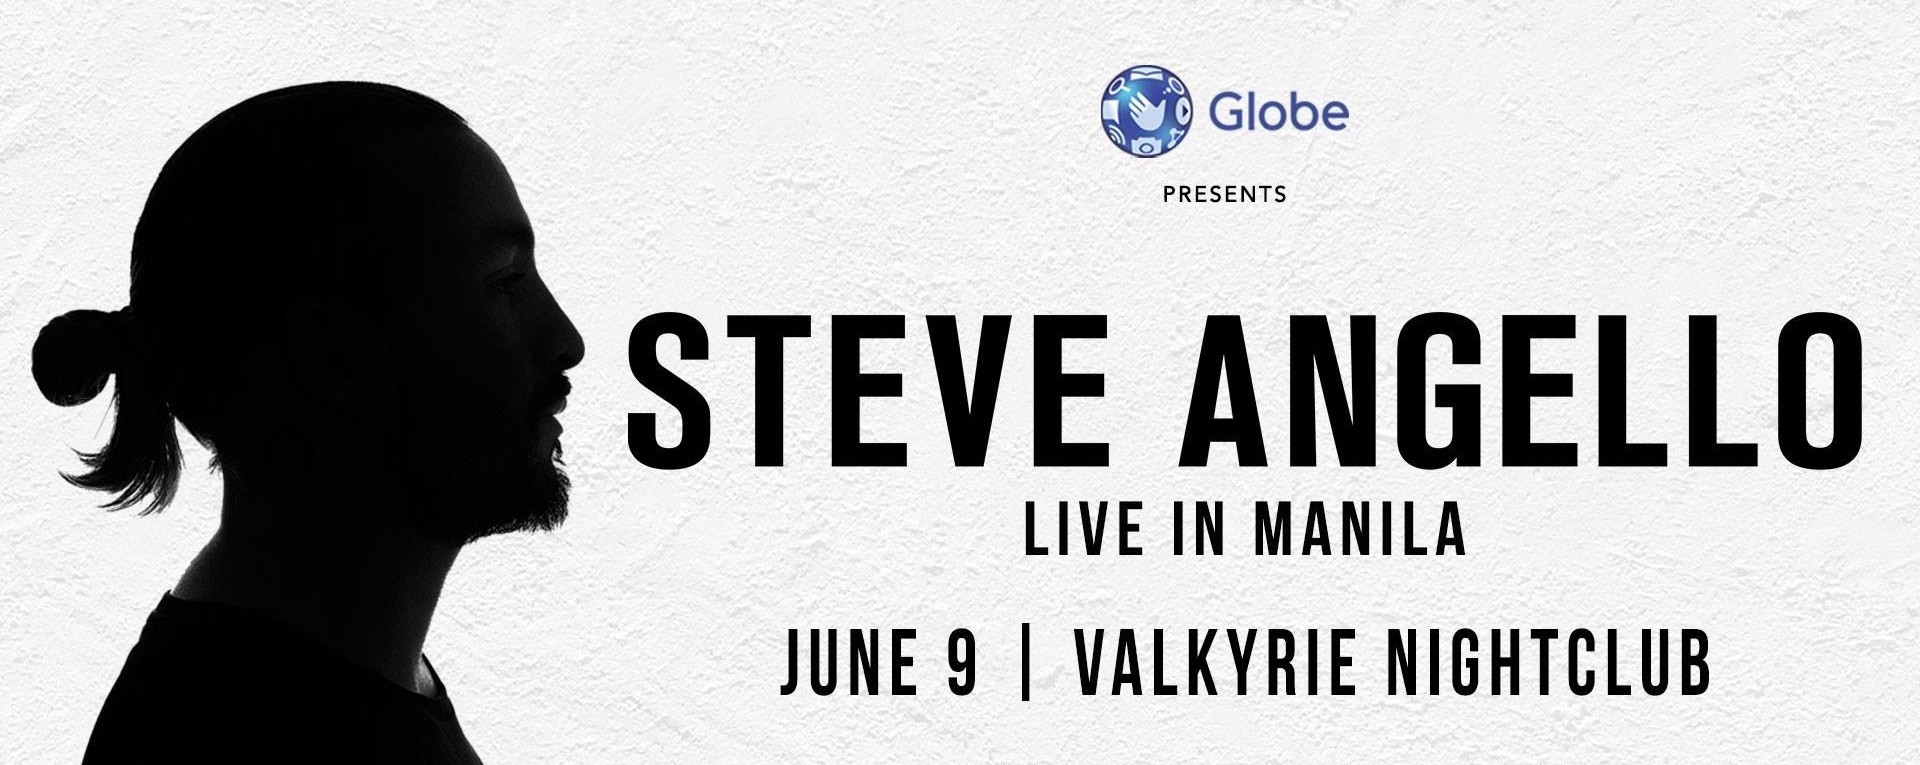 Steve Angello Live at Valkyrie Nightclub